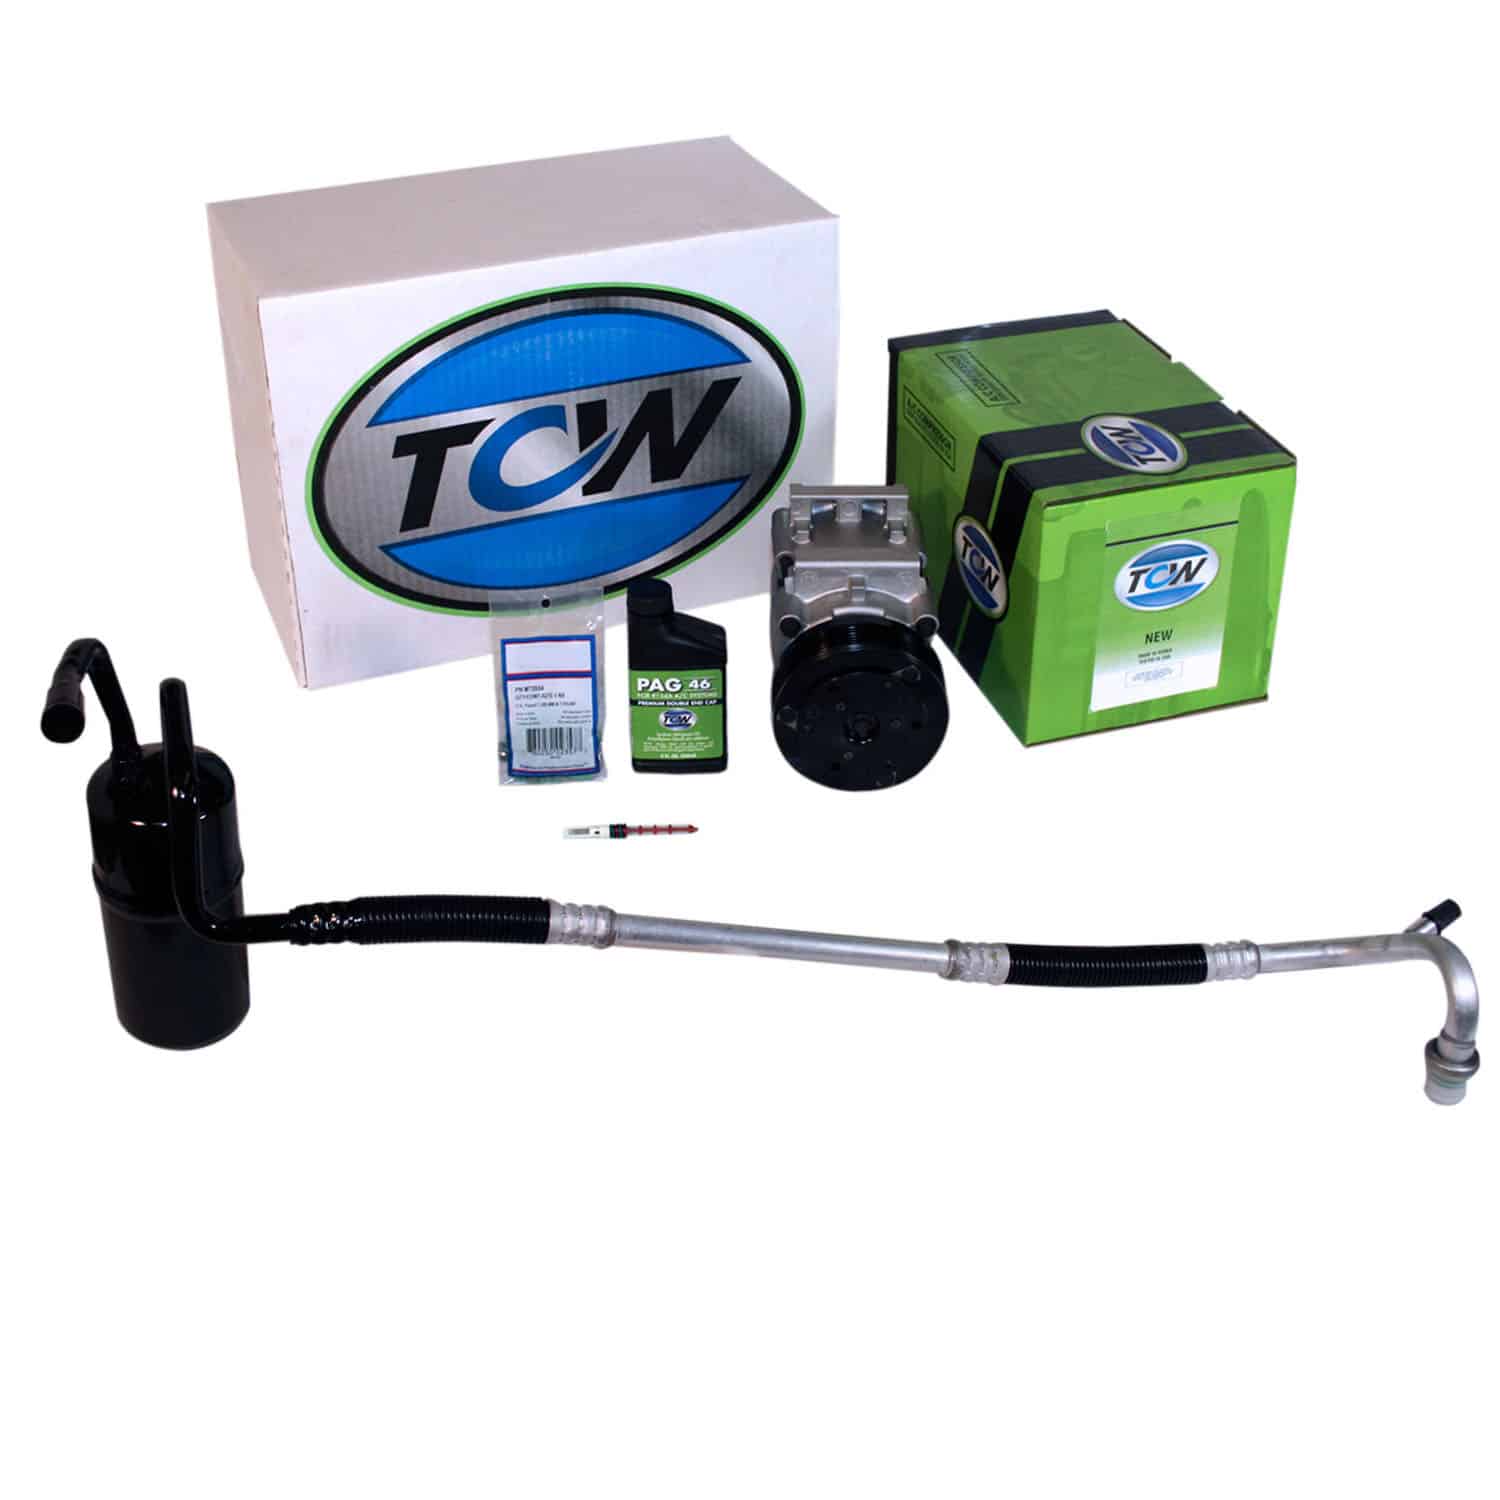 TCW Vehicle A/C Kit K1000285N New Product Image field_60b6a13a6e67c